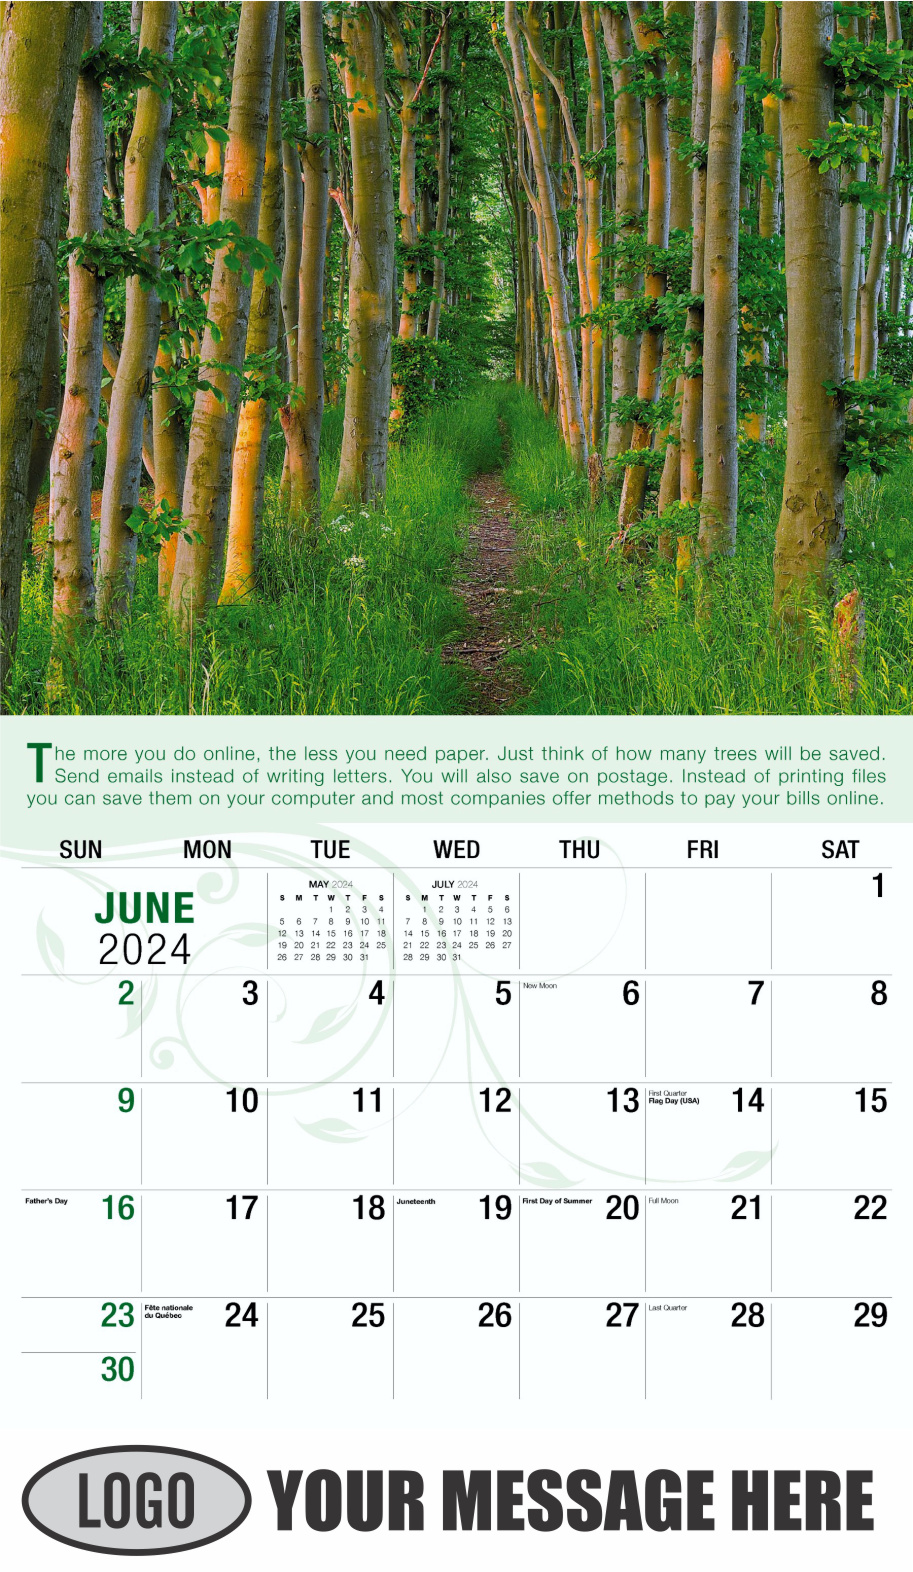 Go Green 2024 Business Promotion Calendar - June